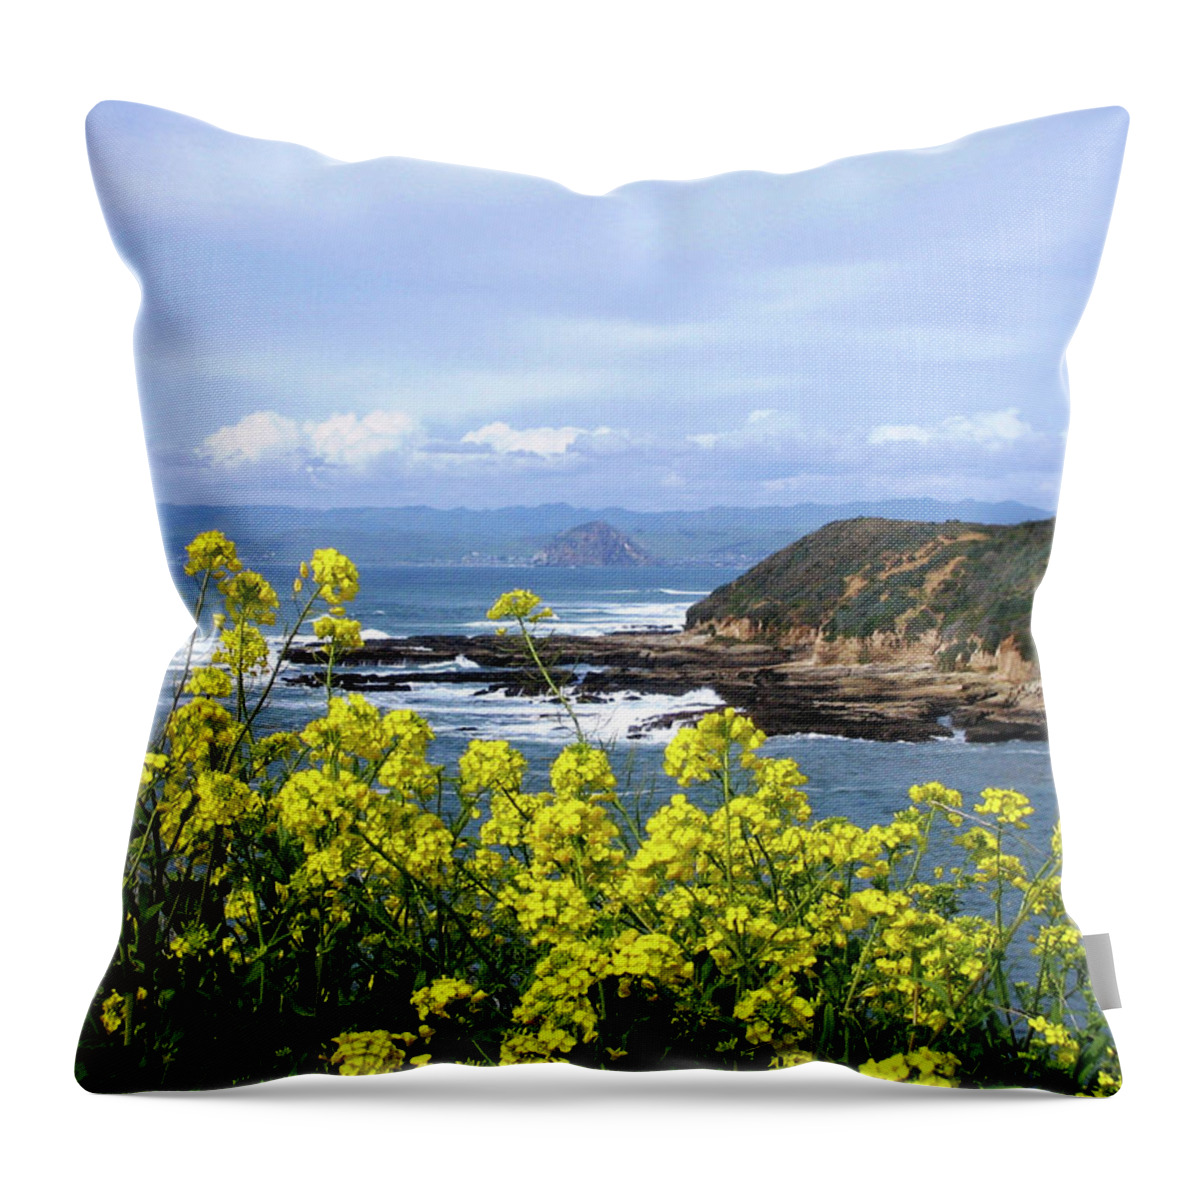 Landscape Throw Pillow featuring the photograph Through Yellow Flowers by Lorraine Devon Wilke